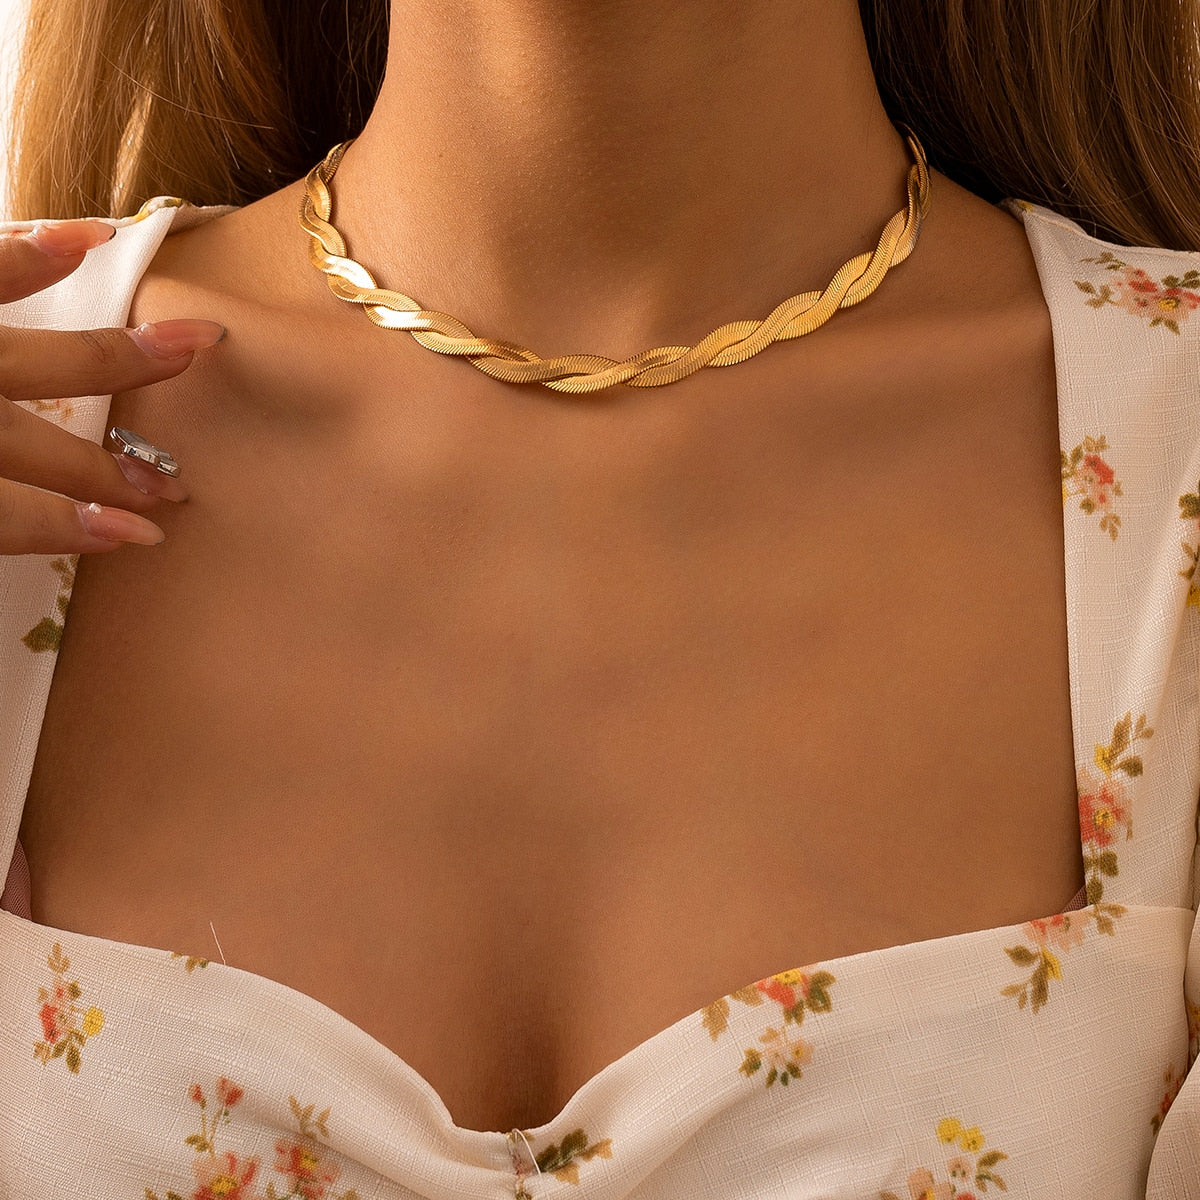 Lacteo Fashion Gold Weave Snake Chain Choker Necklace